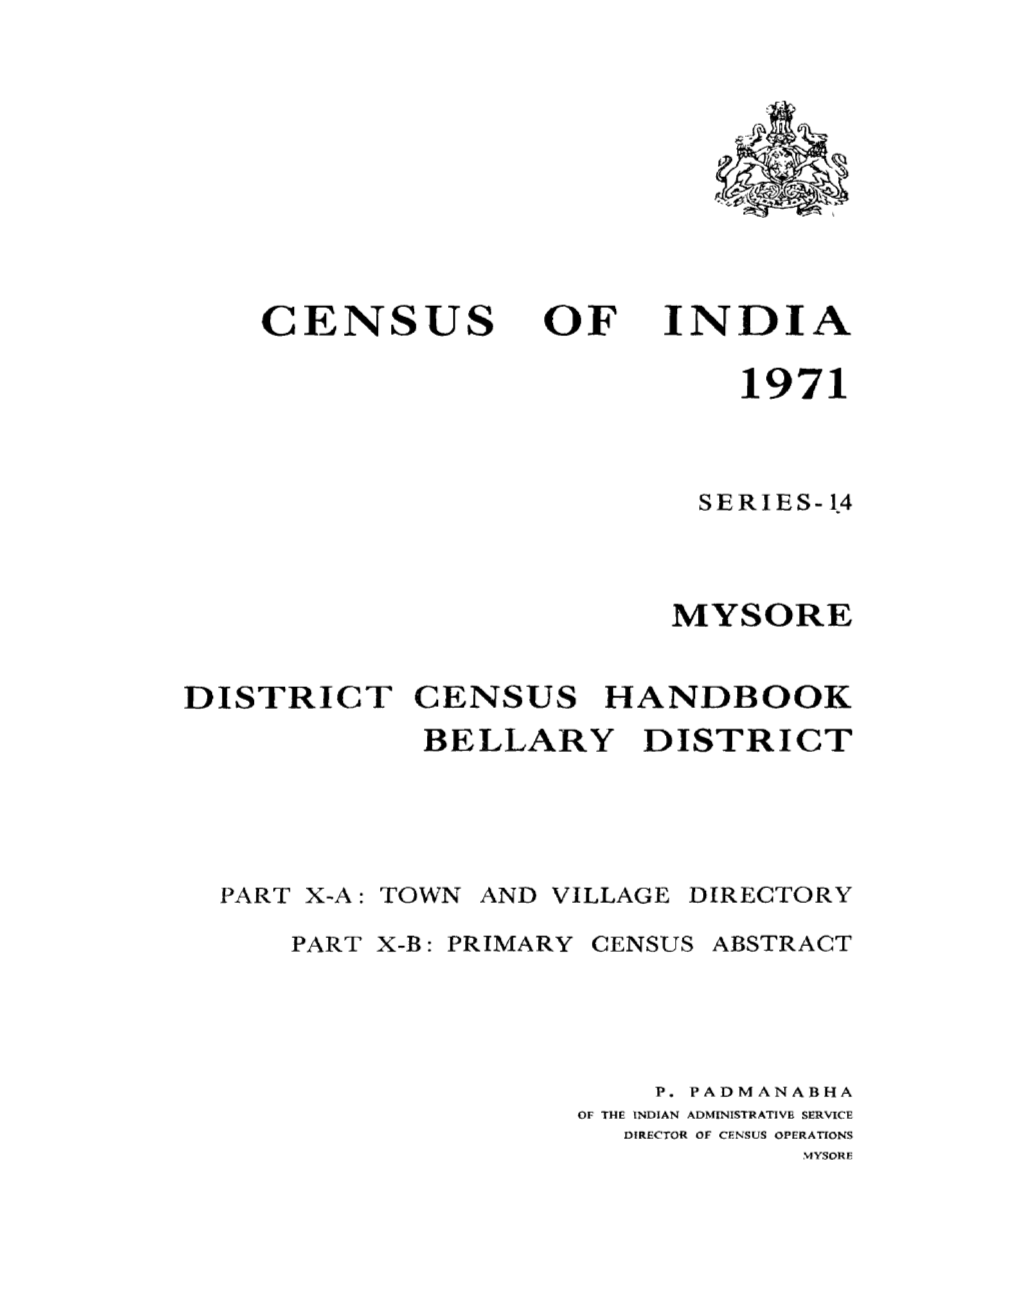 District Census Handbook, Bellary, Part X-A, B, Series-14